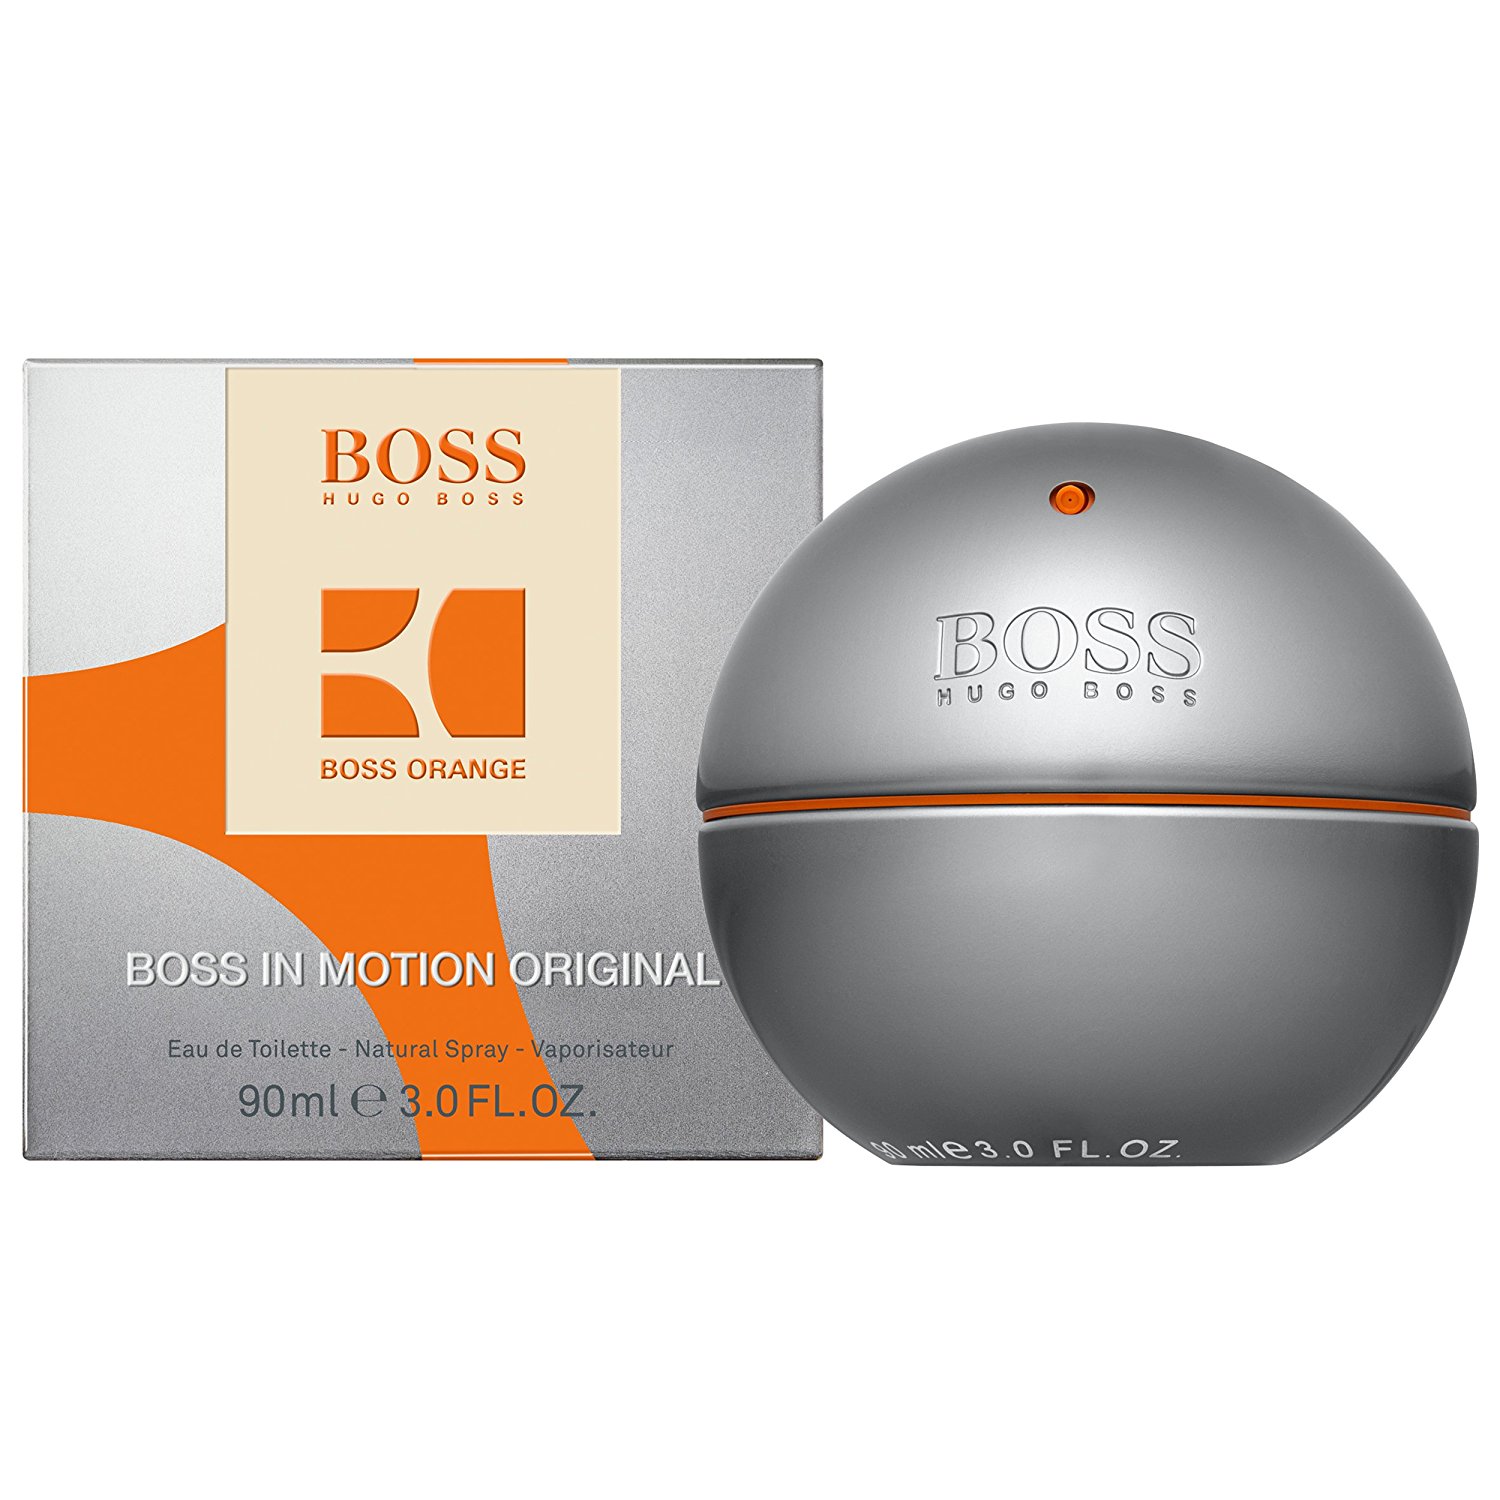 Boss in Motion Hugo Boss for men kutu şişe 2018 kutu boss orange original.jpg